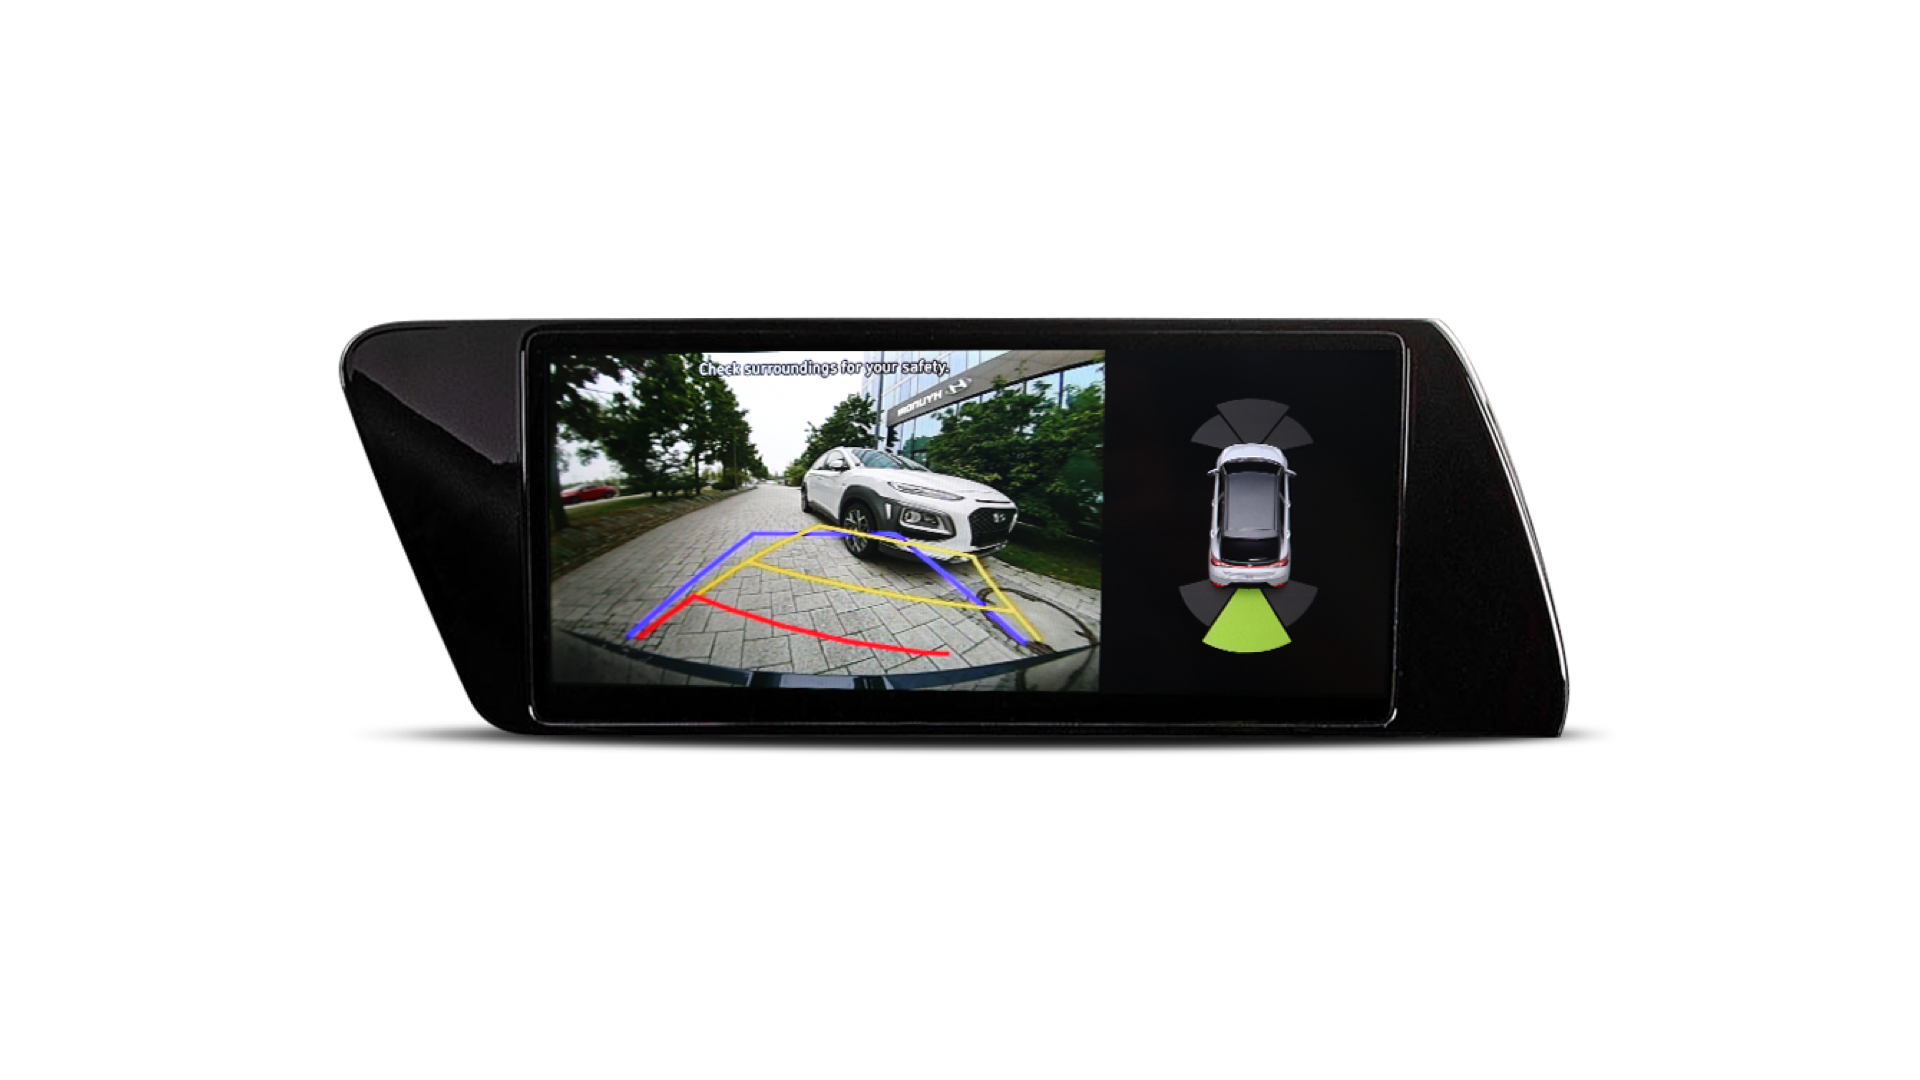 Image of the Mood Modes screen in the Hyundai i20's navigation menu